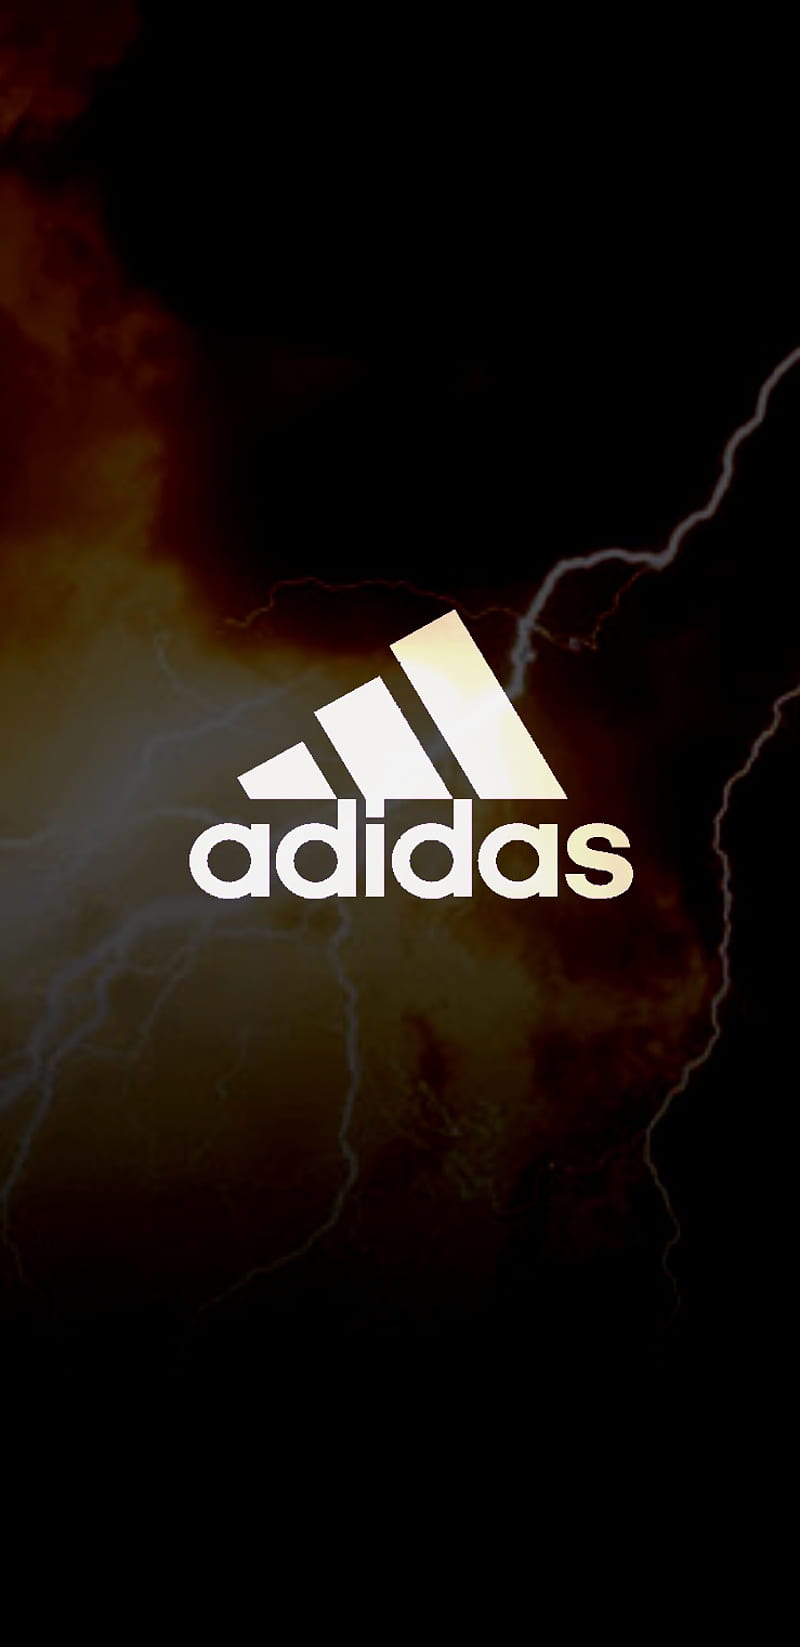 Adidas Adidas tapeta iPhone Wallpapers Free Download